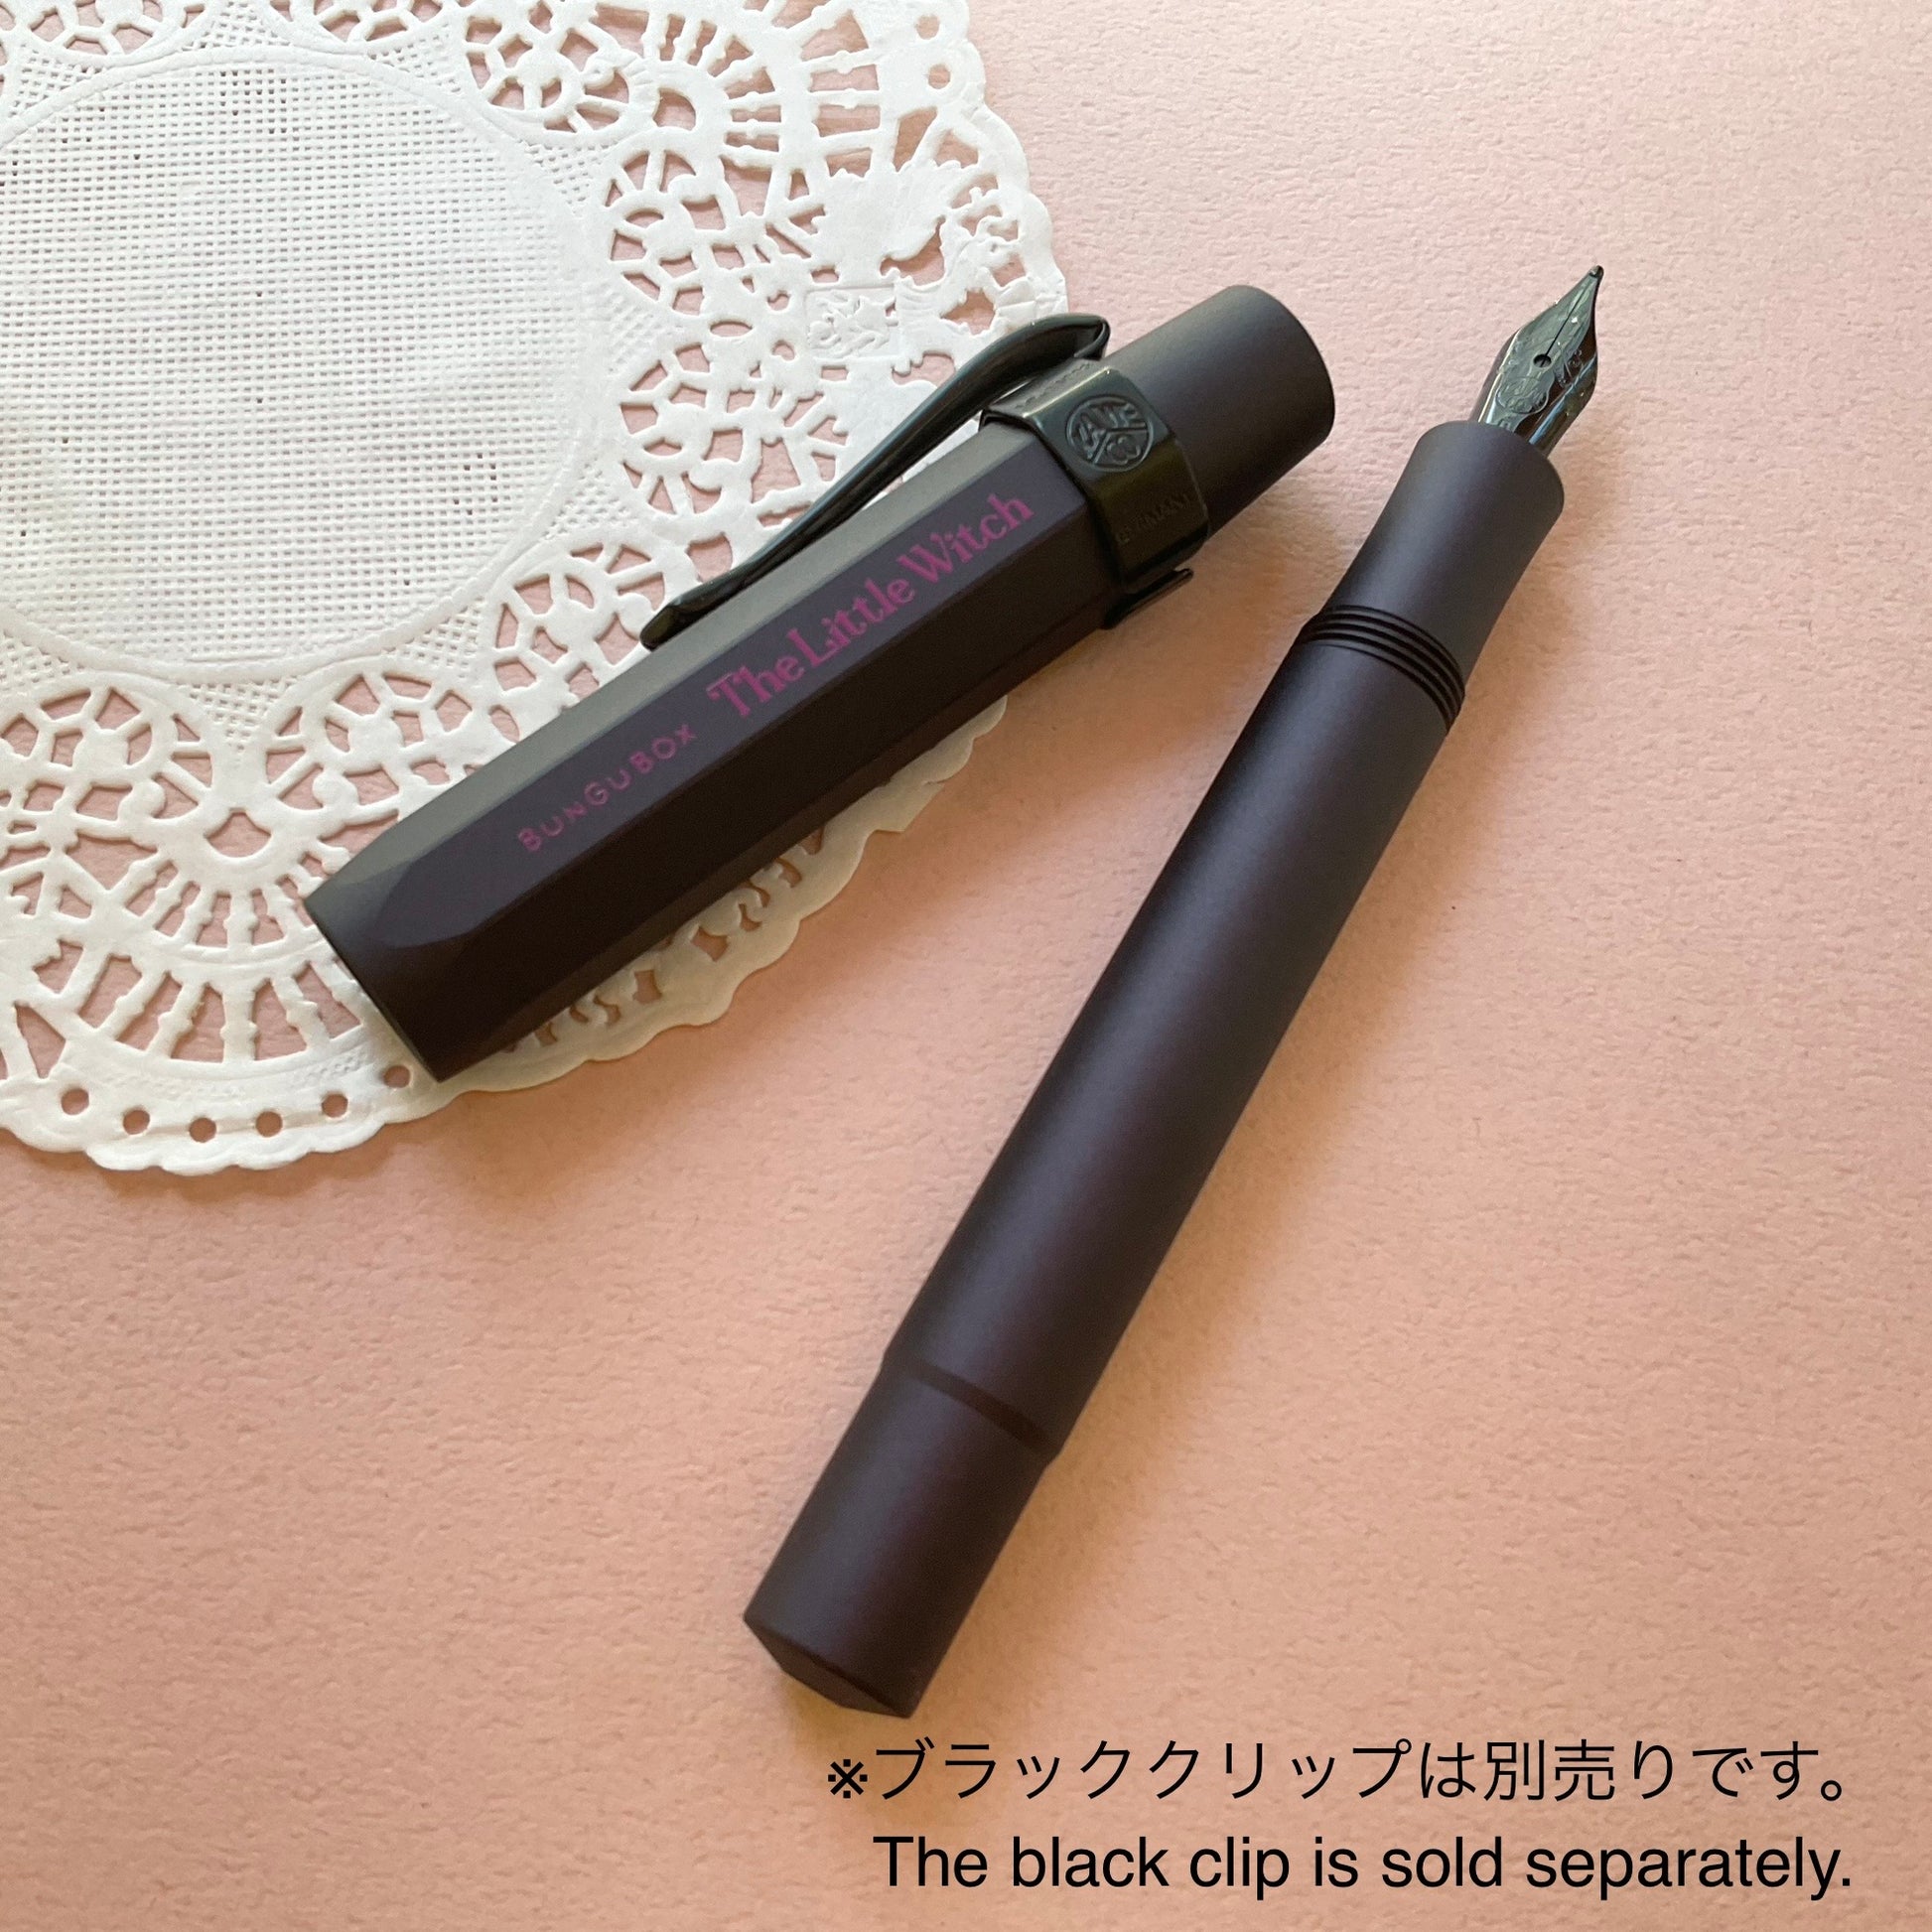 BUNGUBOX × KAWECO] Original Fountain Pen The Little Witch